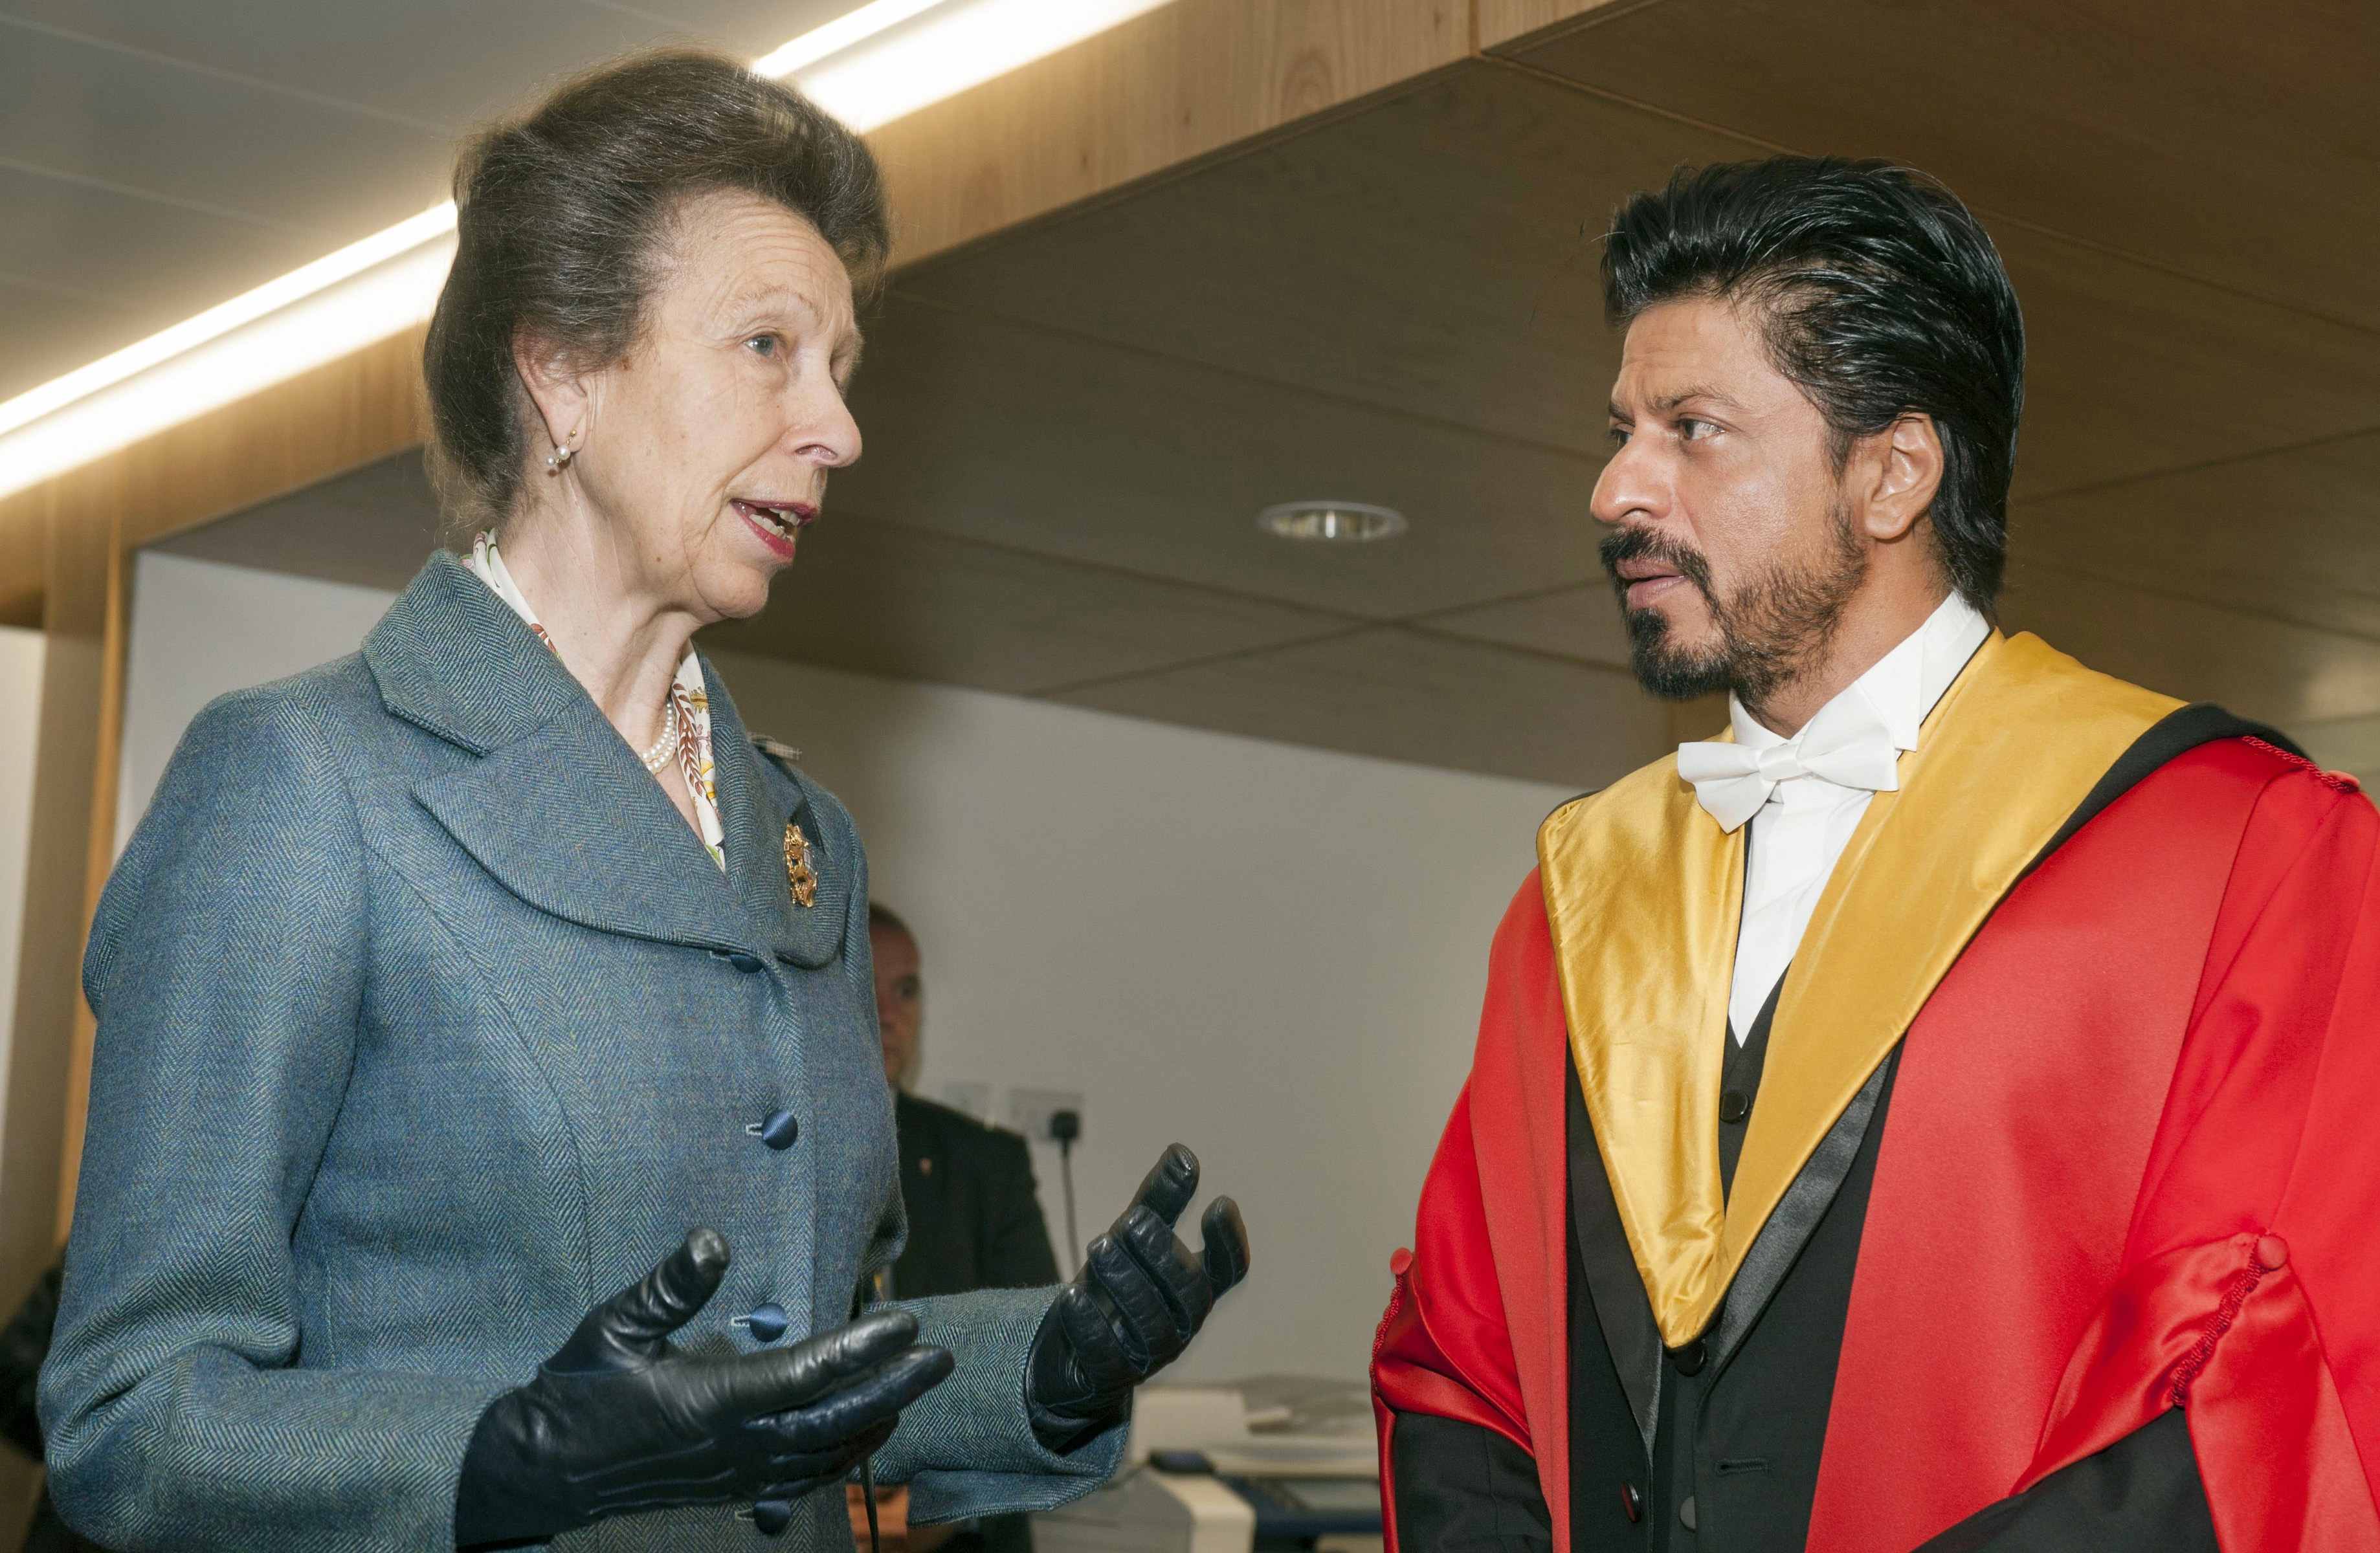 The Princess Royal of Edinburgh in talks with Shah Rukh Khan at University Of Edinburgh on 15th October 2015